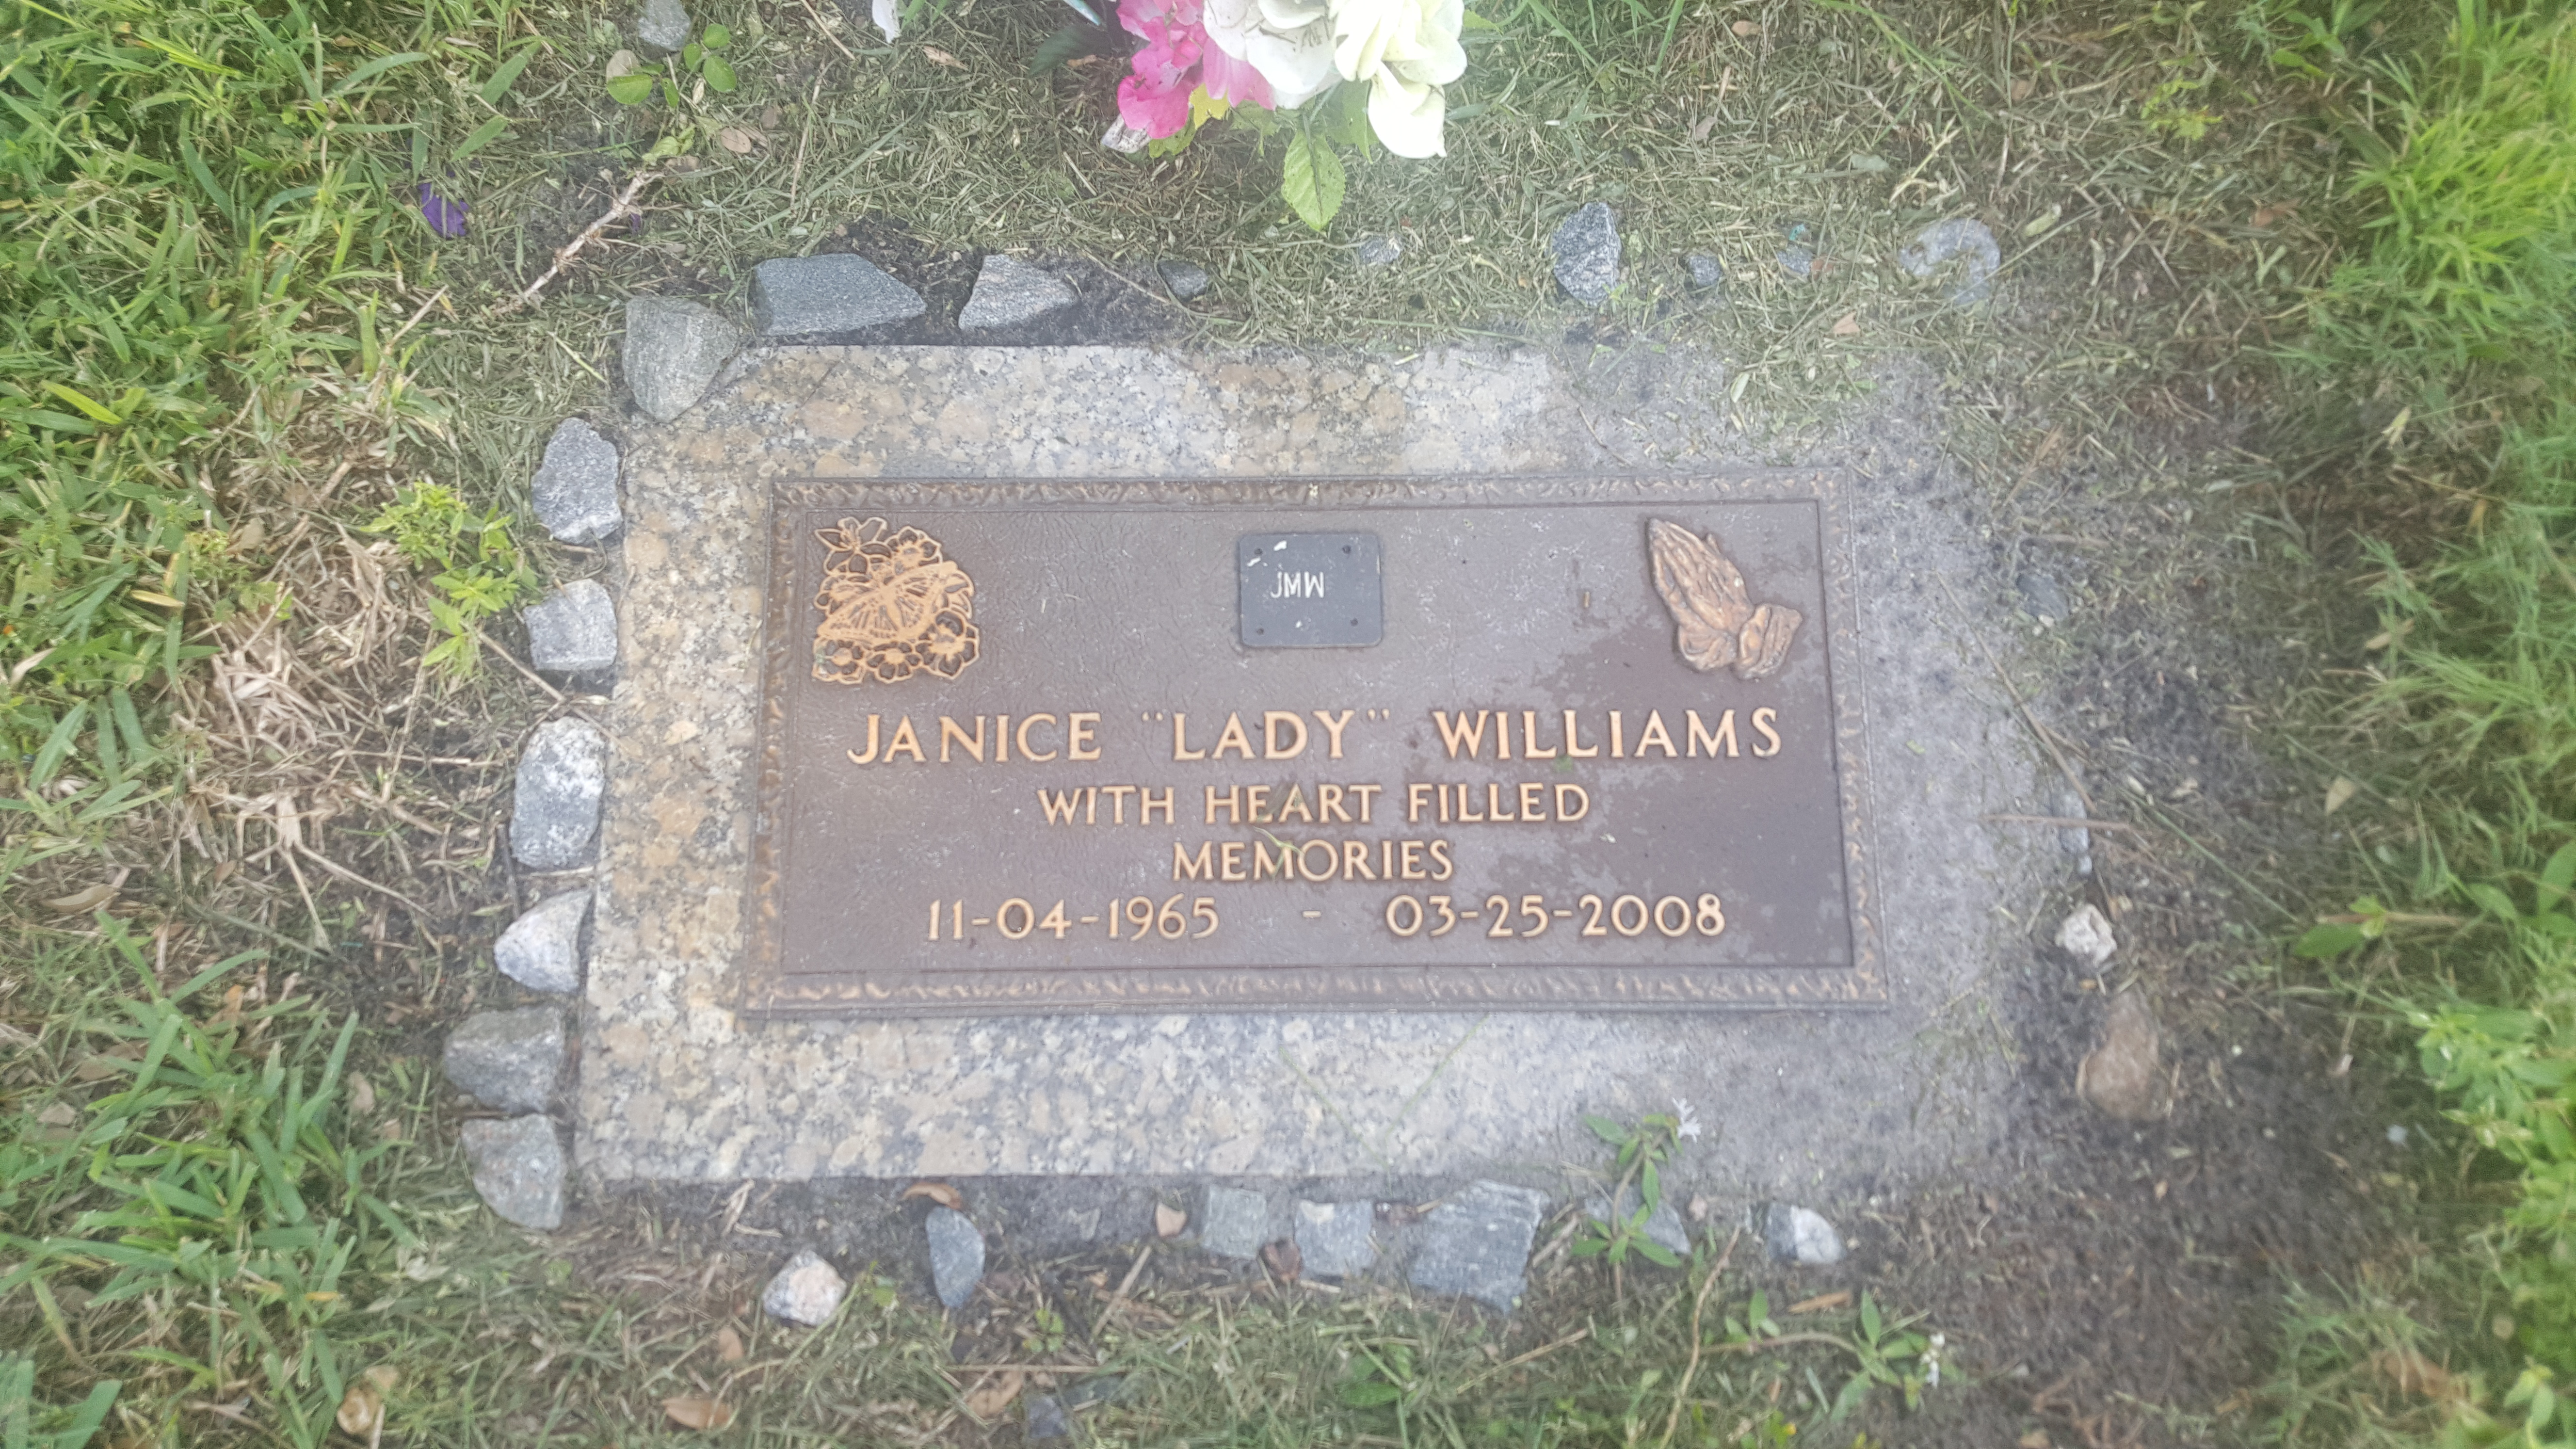 Janice "Lady" Williams